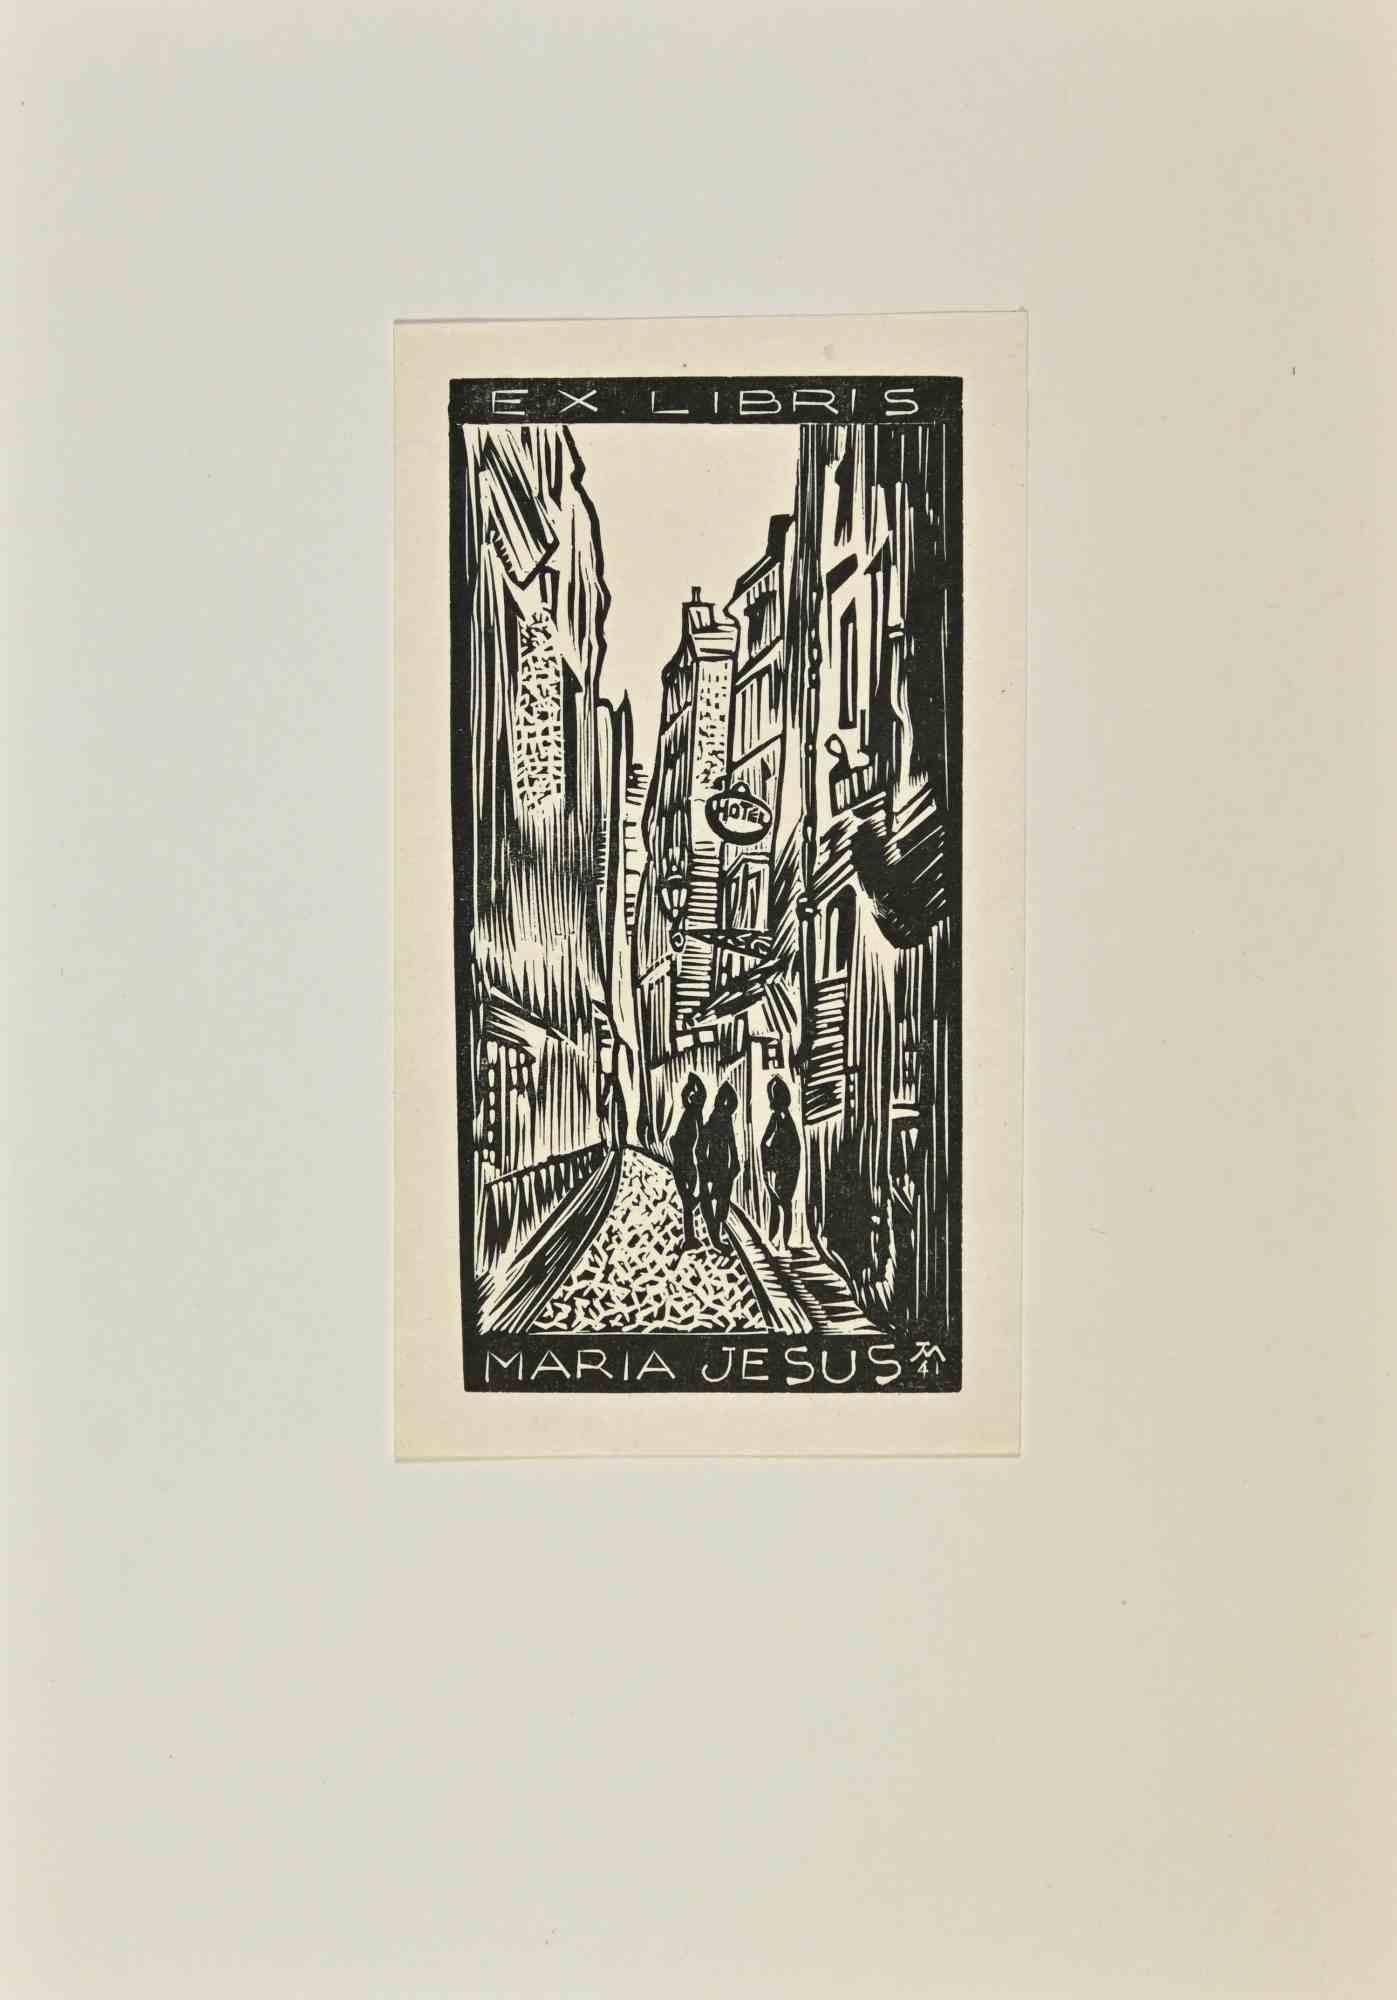  Ex Libris  - Maria Jesus - Woodcut - Mid 20th Century - Art by Unknown